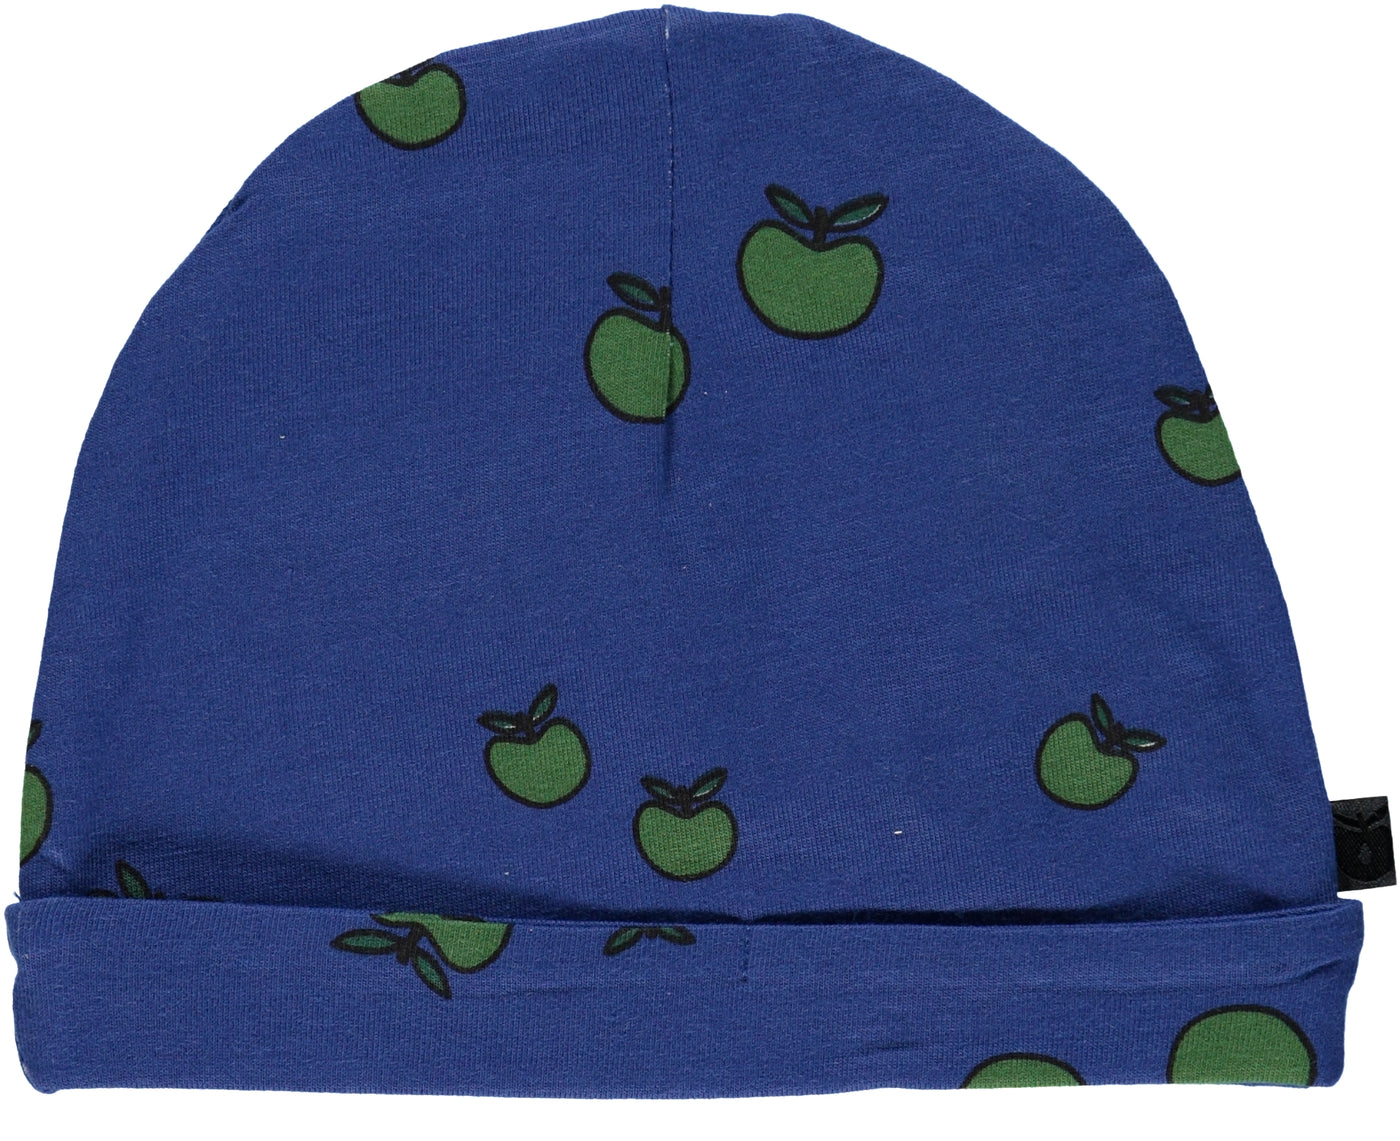 Smafolk Baby Hat - Apples Blue